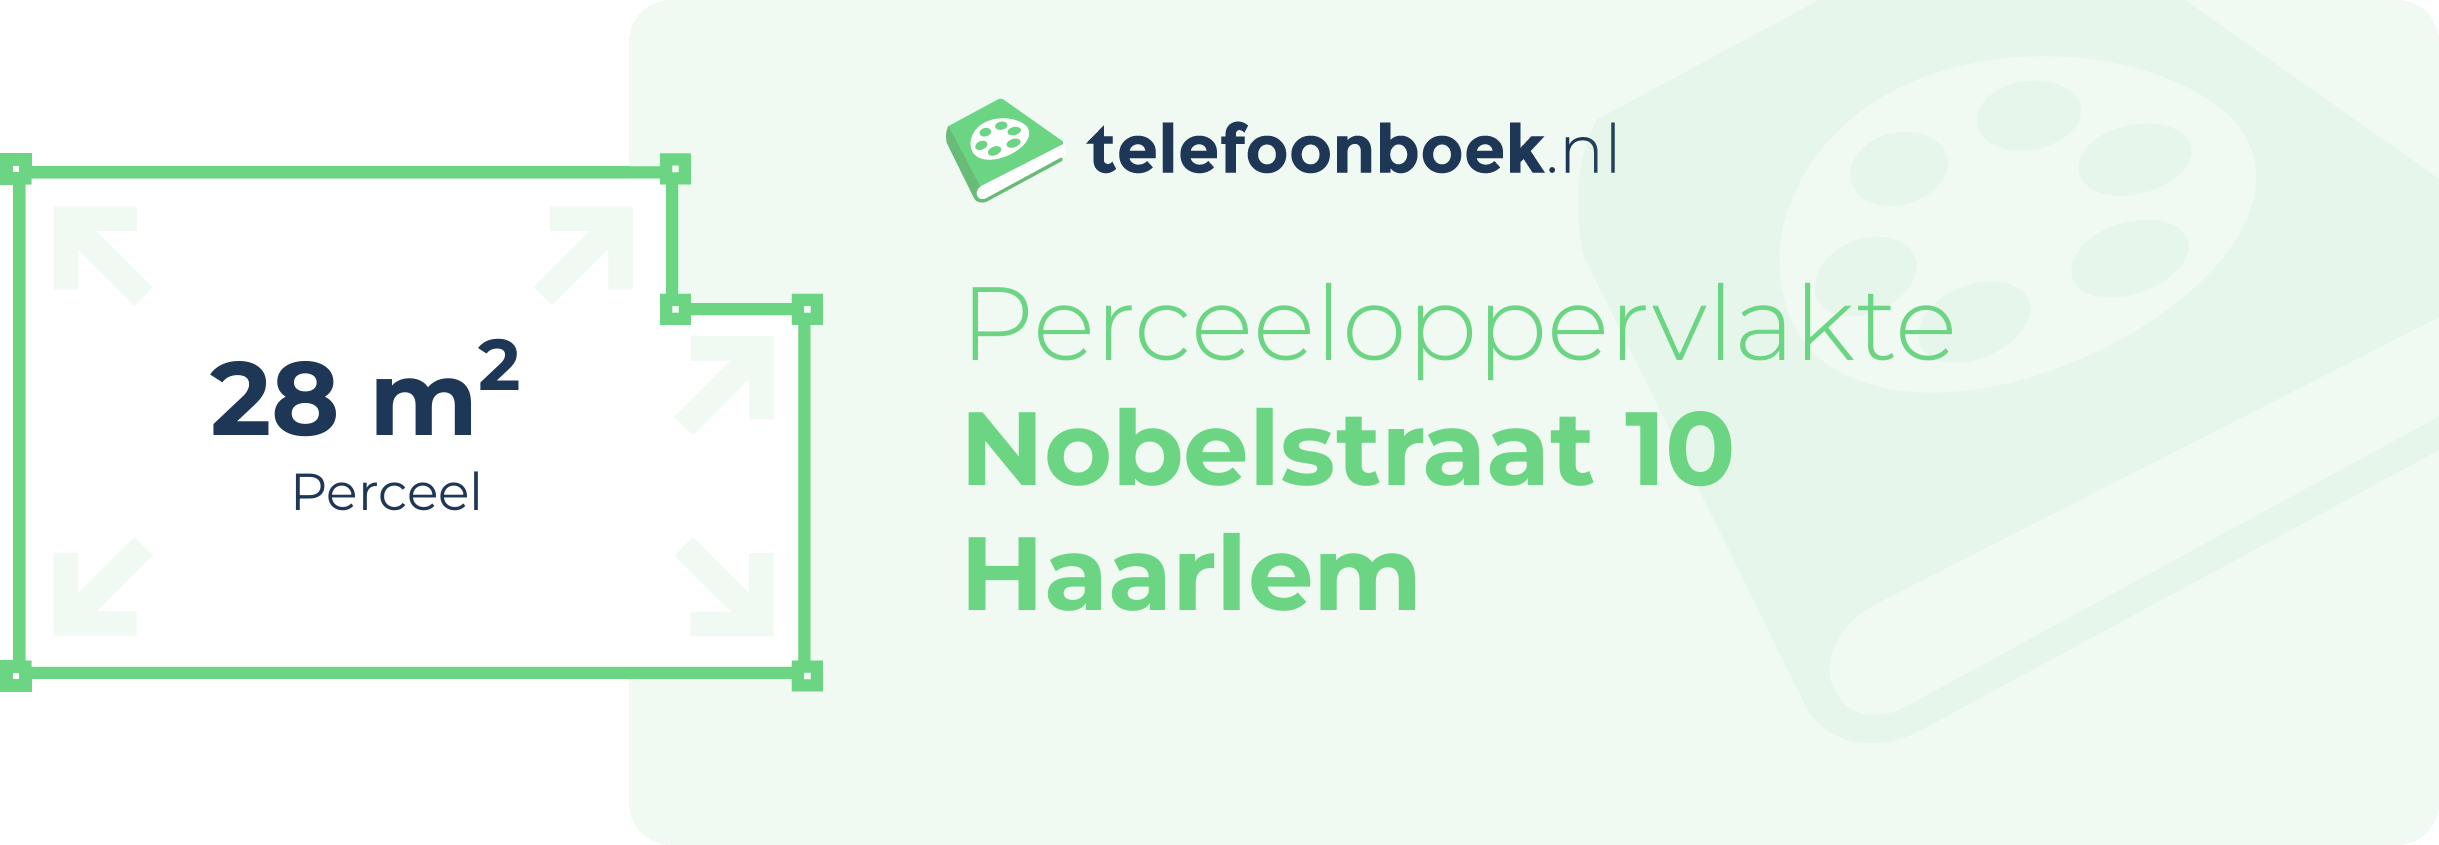 Perceeloppervlakte Nobelstraat 10 Haarlem